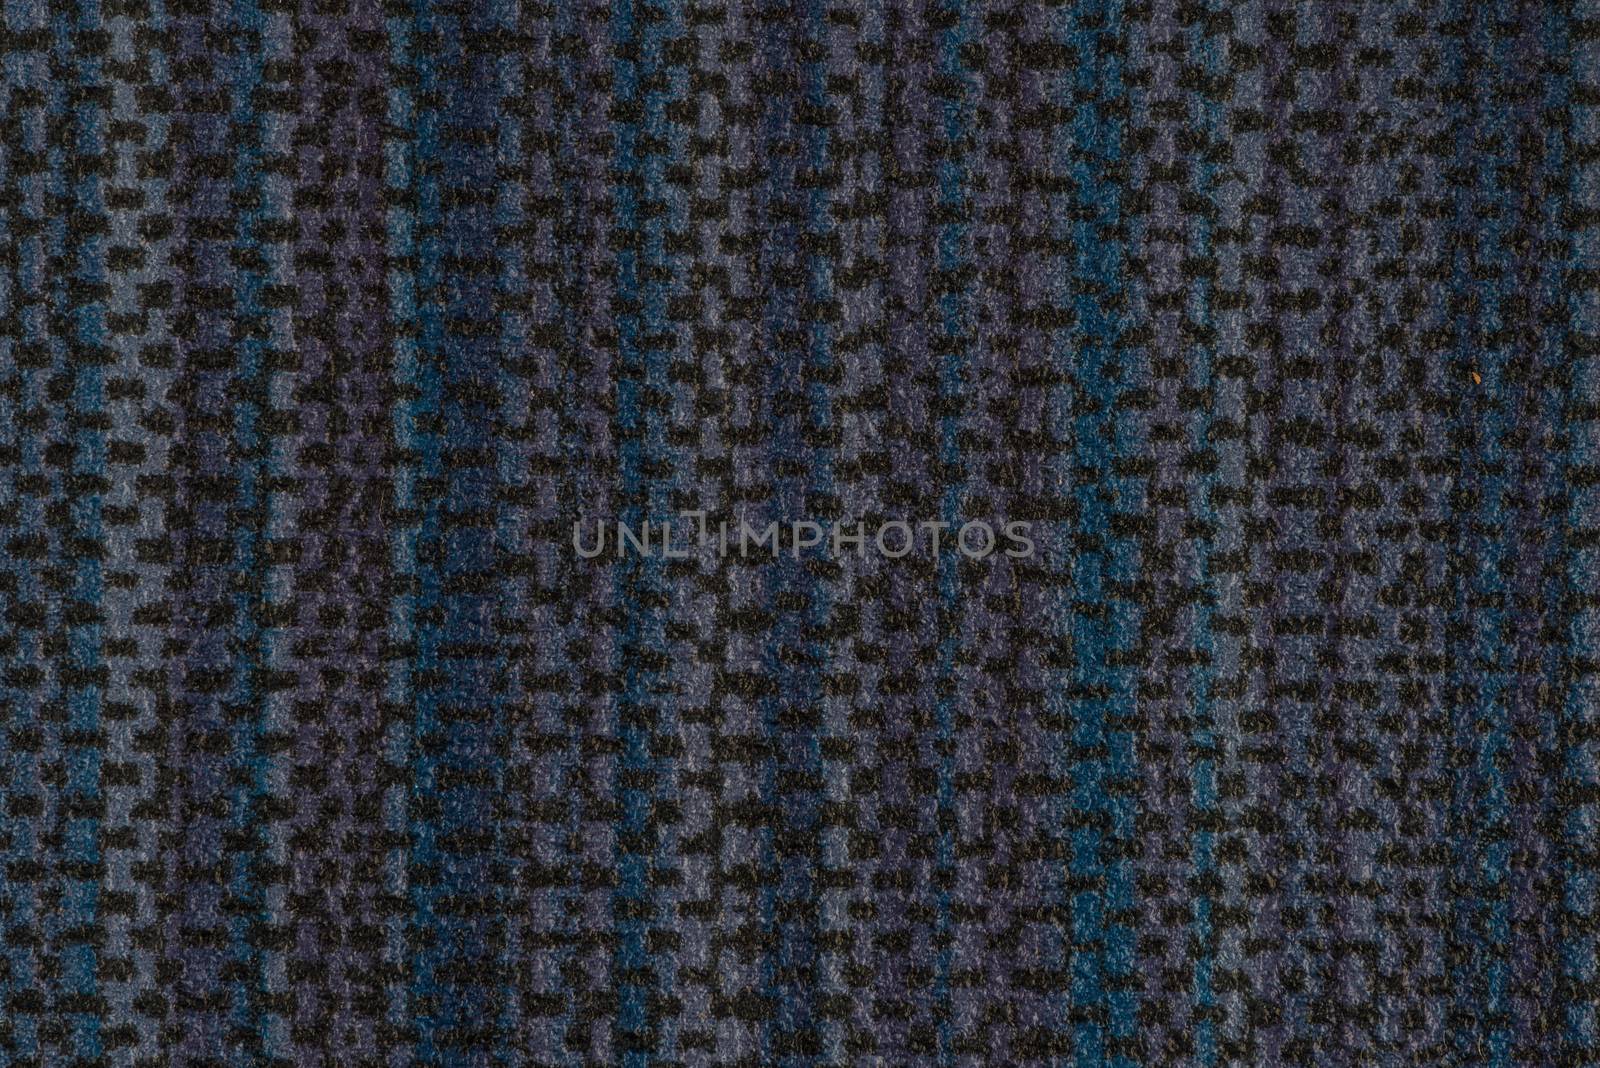 Blue vinyl texture by homydesign